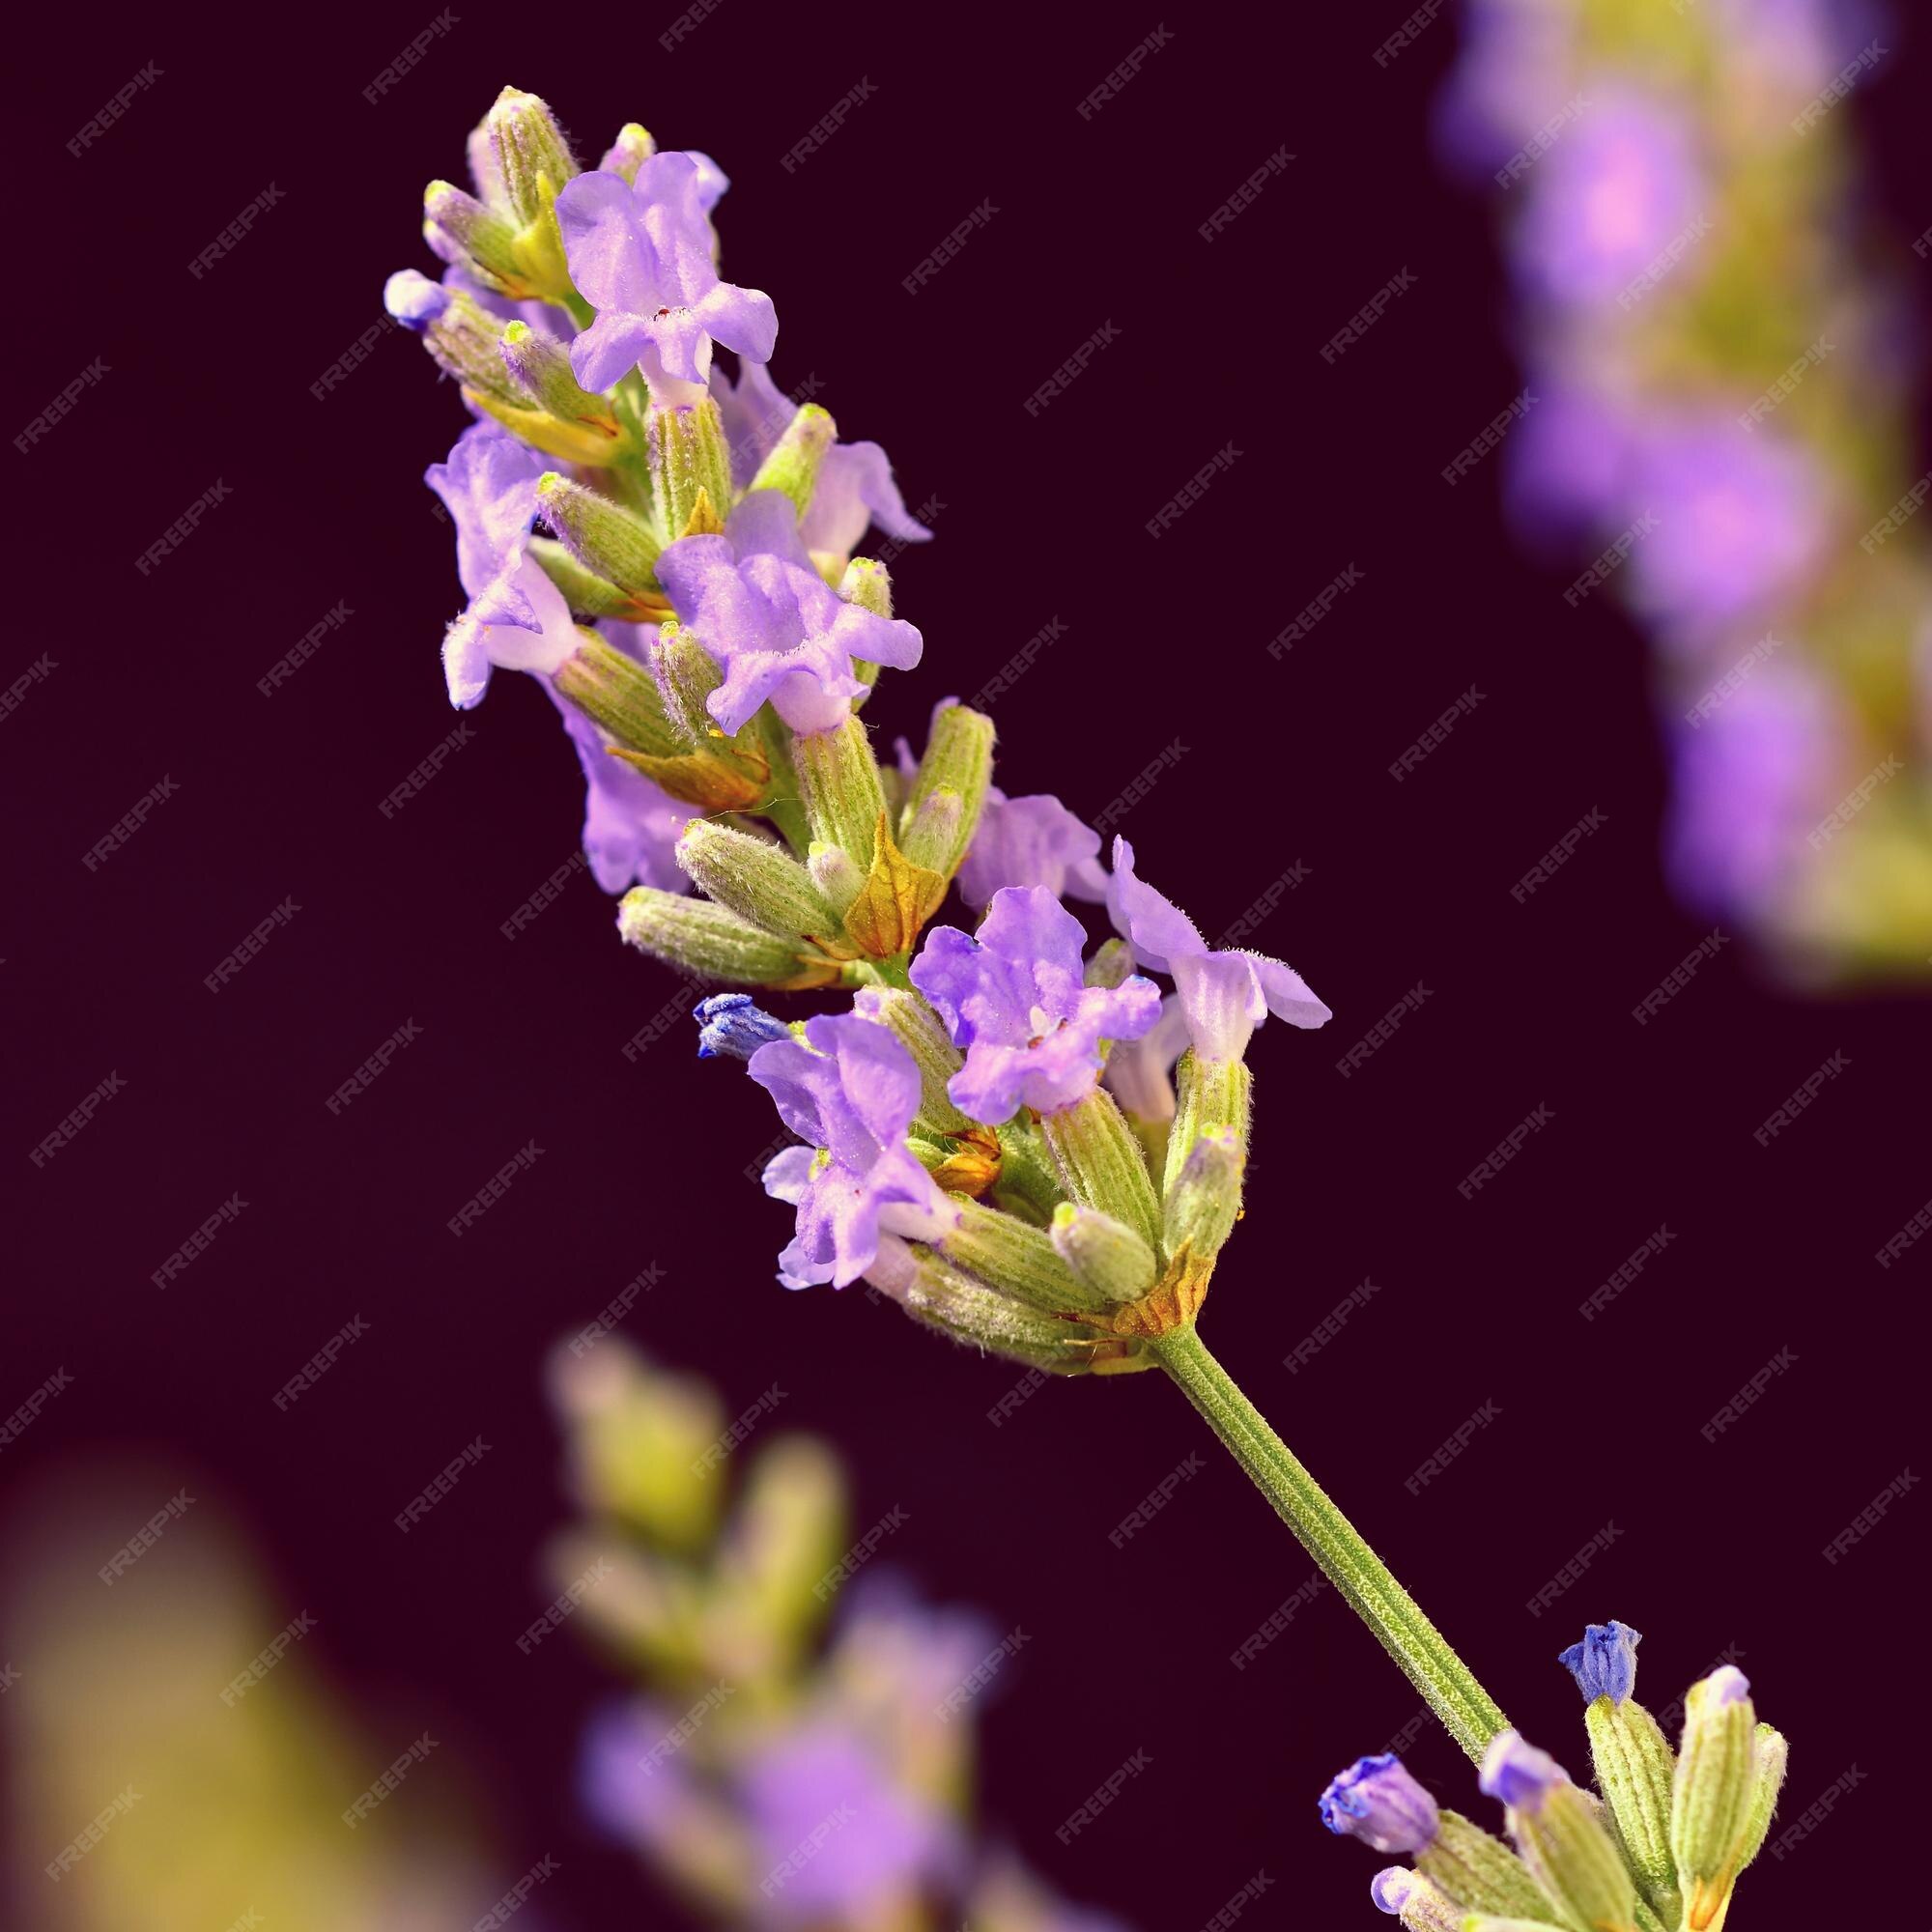 Lavanda bellamente floreciente planta violeta lavandula angustifolia  lavandula angustifolia | Foto Premium